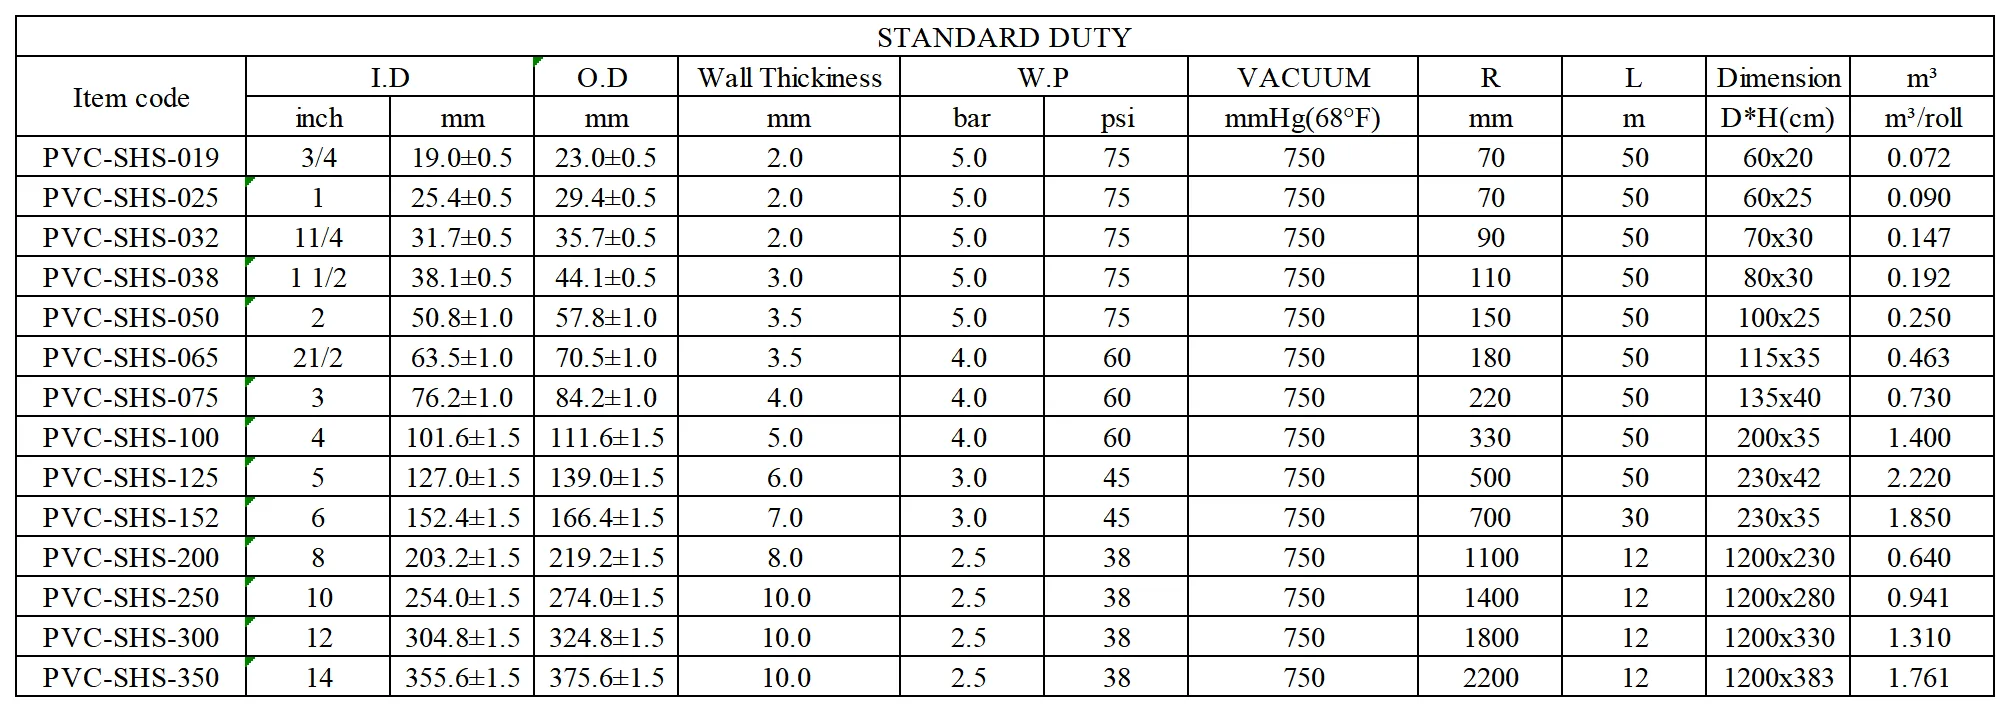 PVC suction hose_standard duty